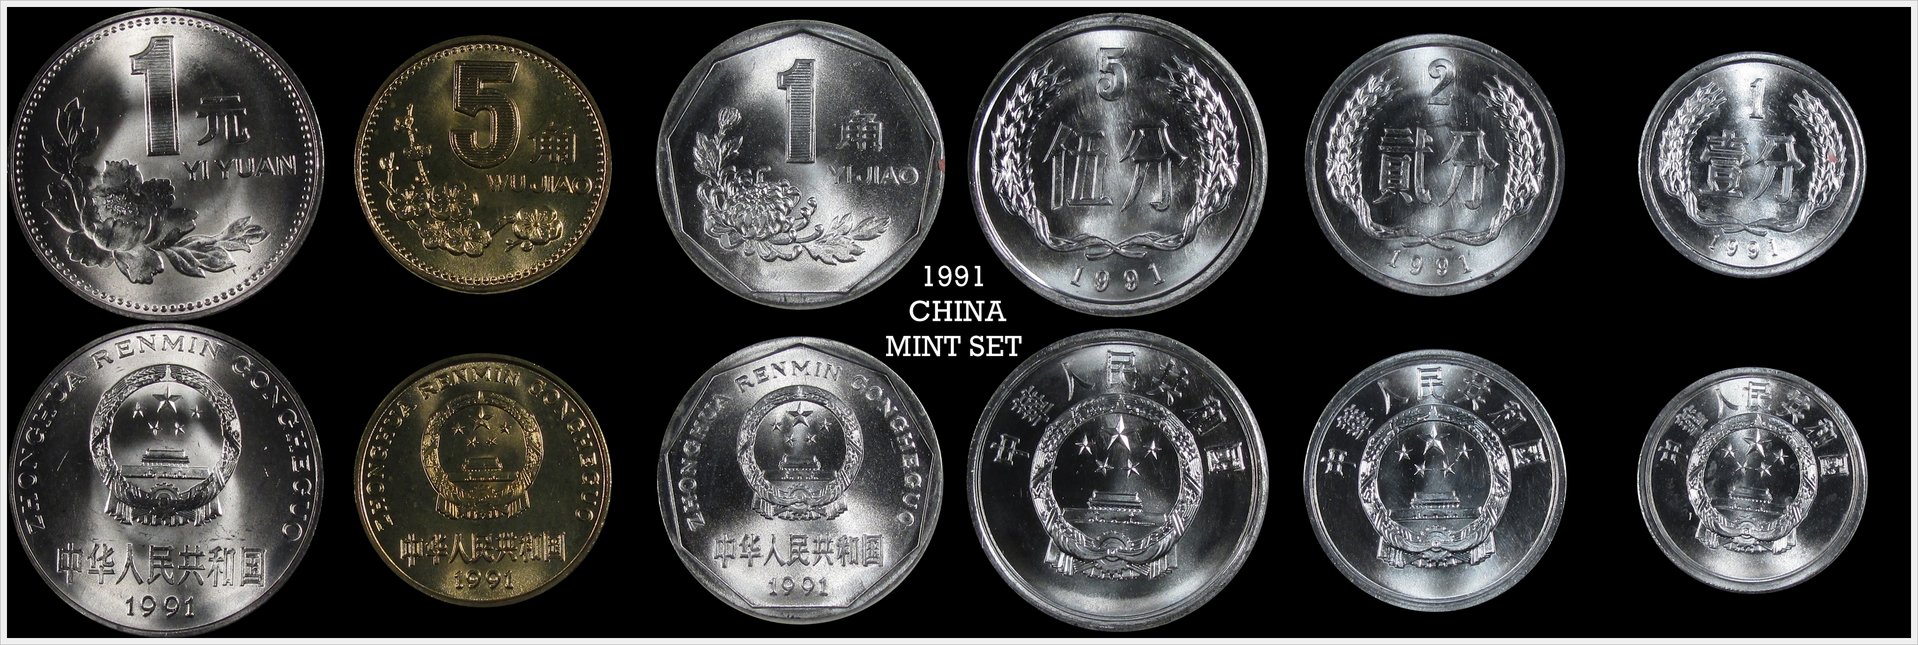 1991 China Mint Set.jpg